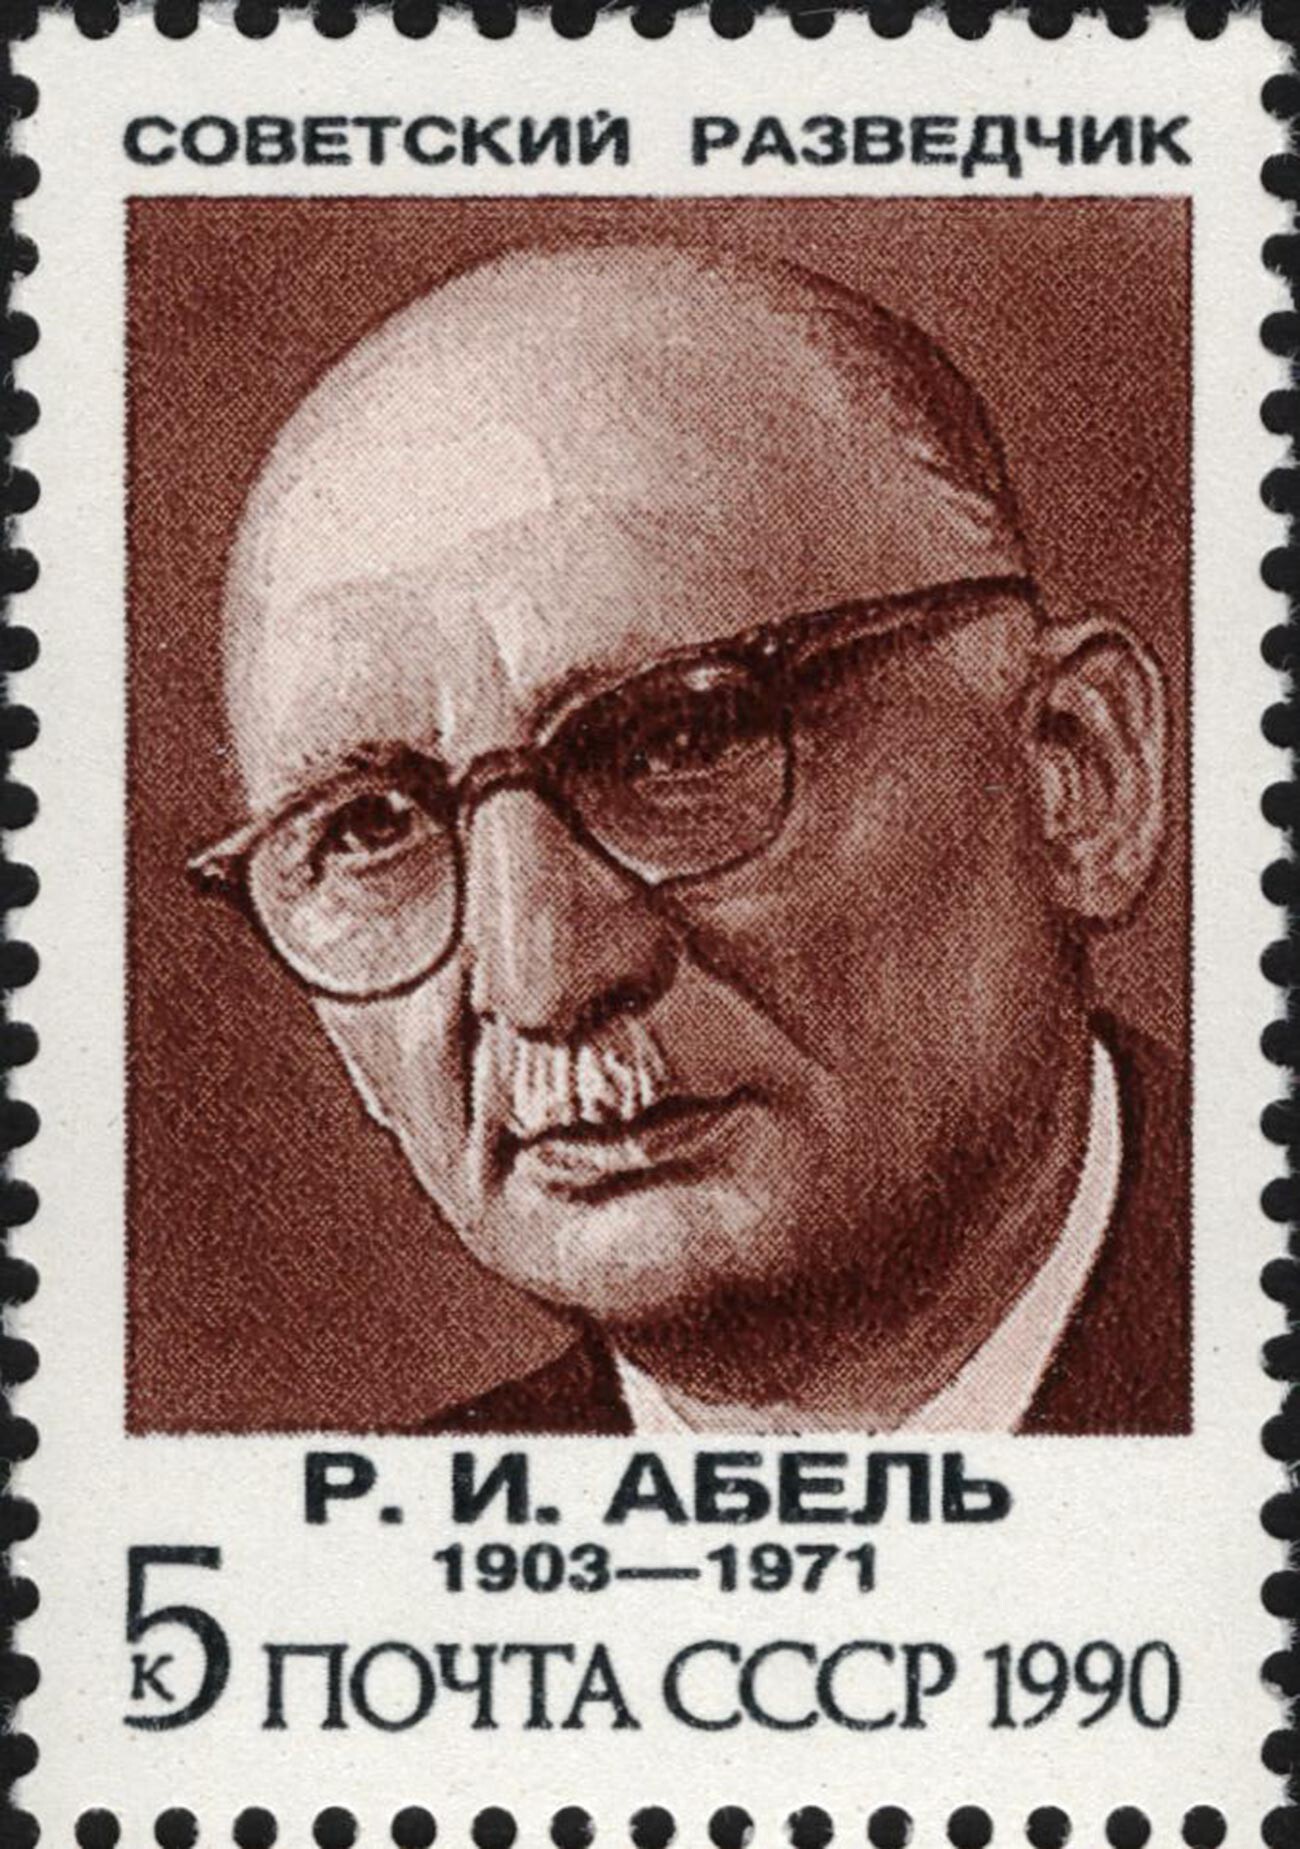 Memorijalna poštanska marka s Rudolfom Abelom